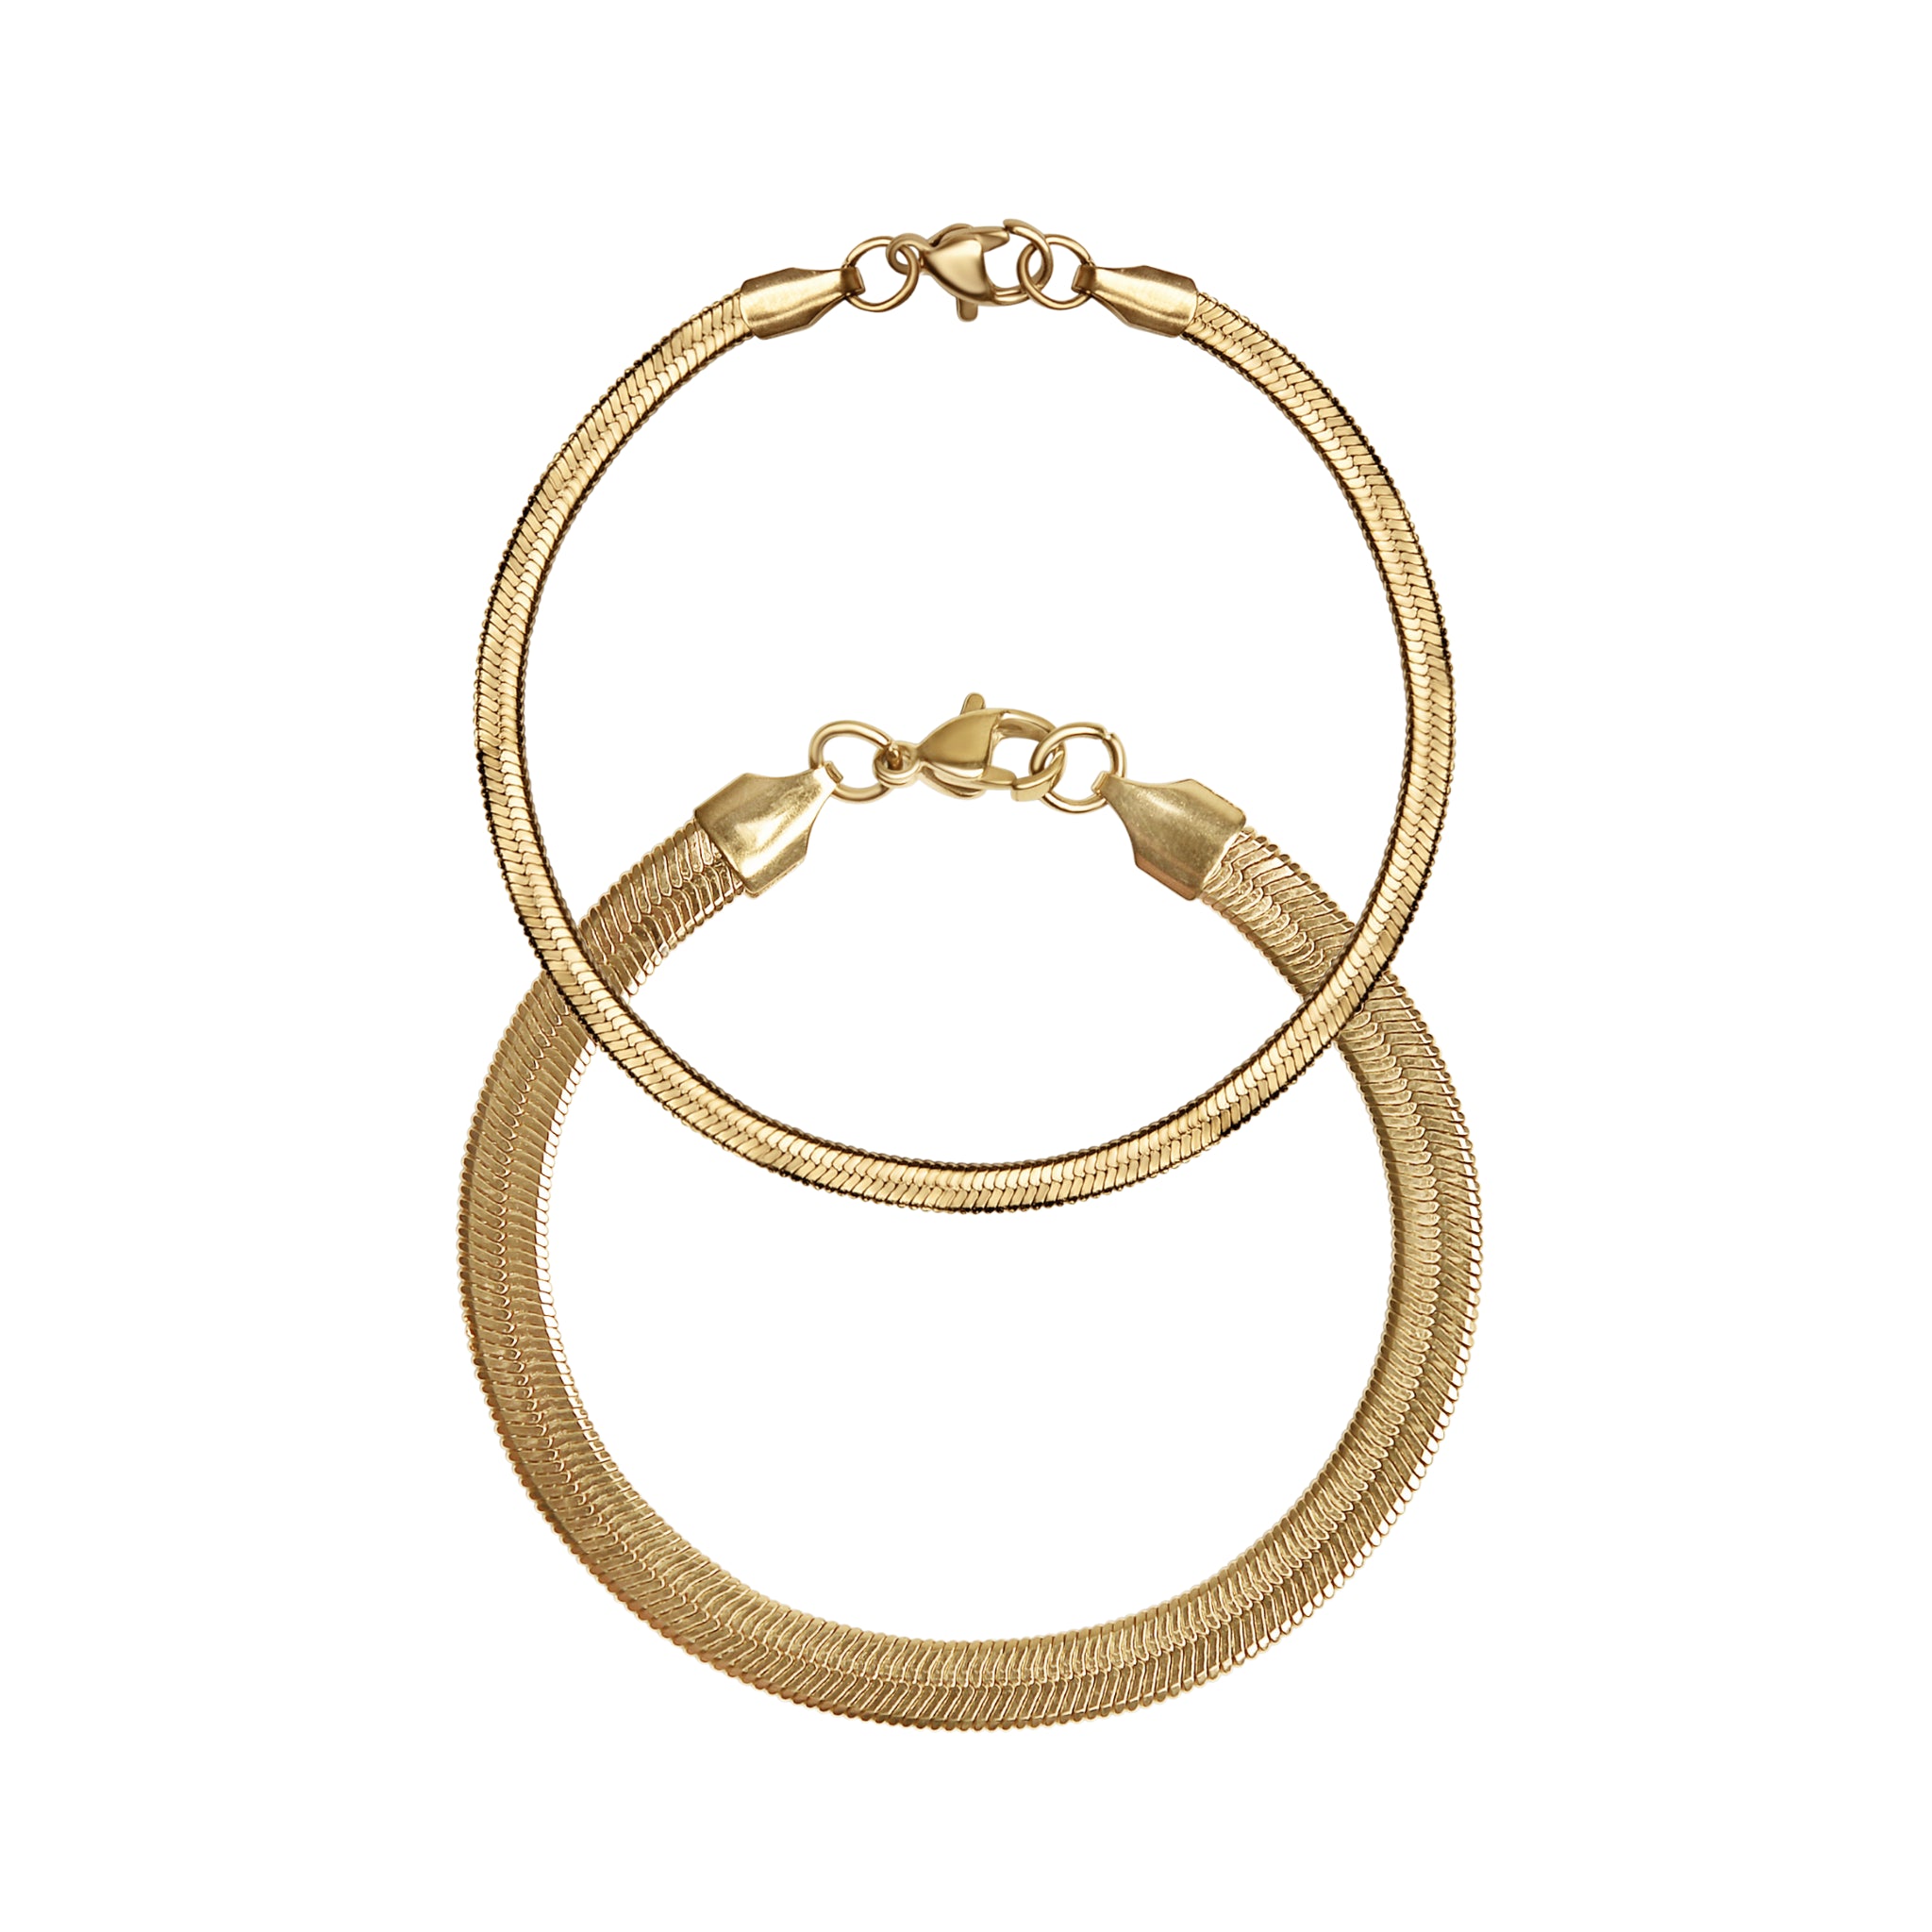 18k Gold PVD Coated Stainless Steel Herringbone Chain Bracelet - Durable, Tarnish-Proof, Hypoallergenic Bijou Her